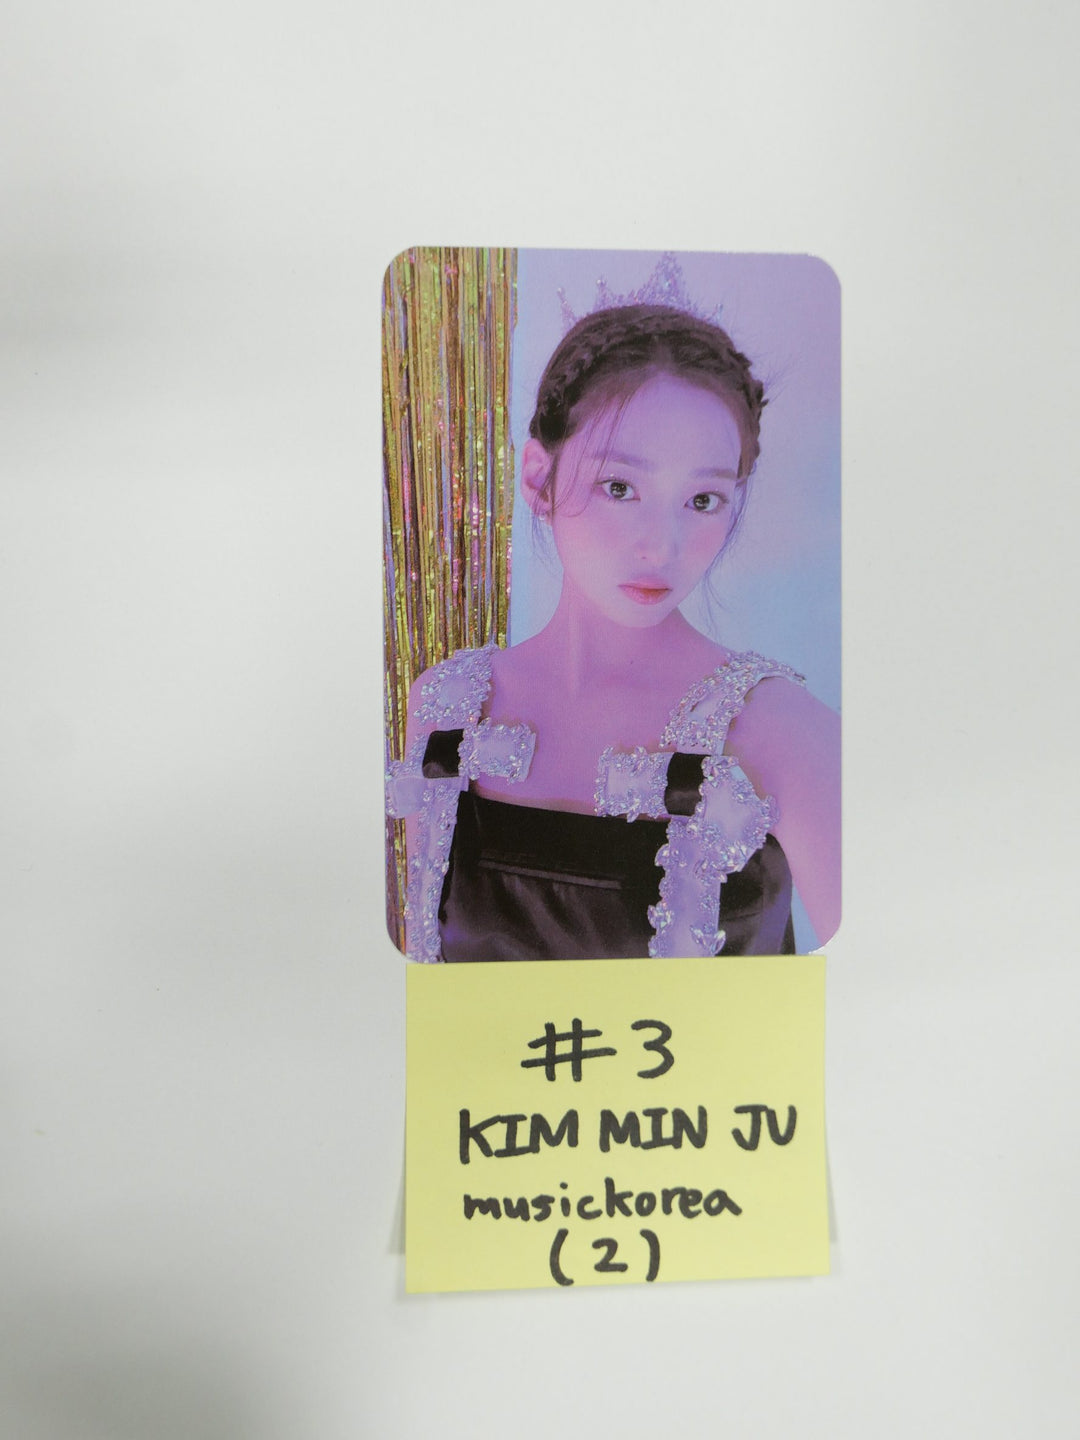 Kim Min Ju (Of Iz*one) "1st Photobook Pro Memoria" - Music Korea Pre-Order Benefit Photocard